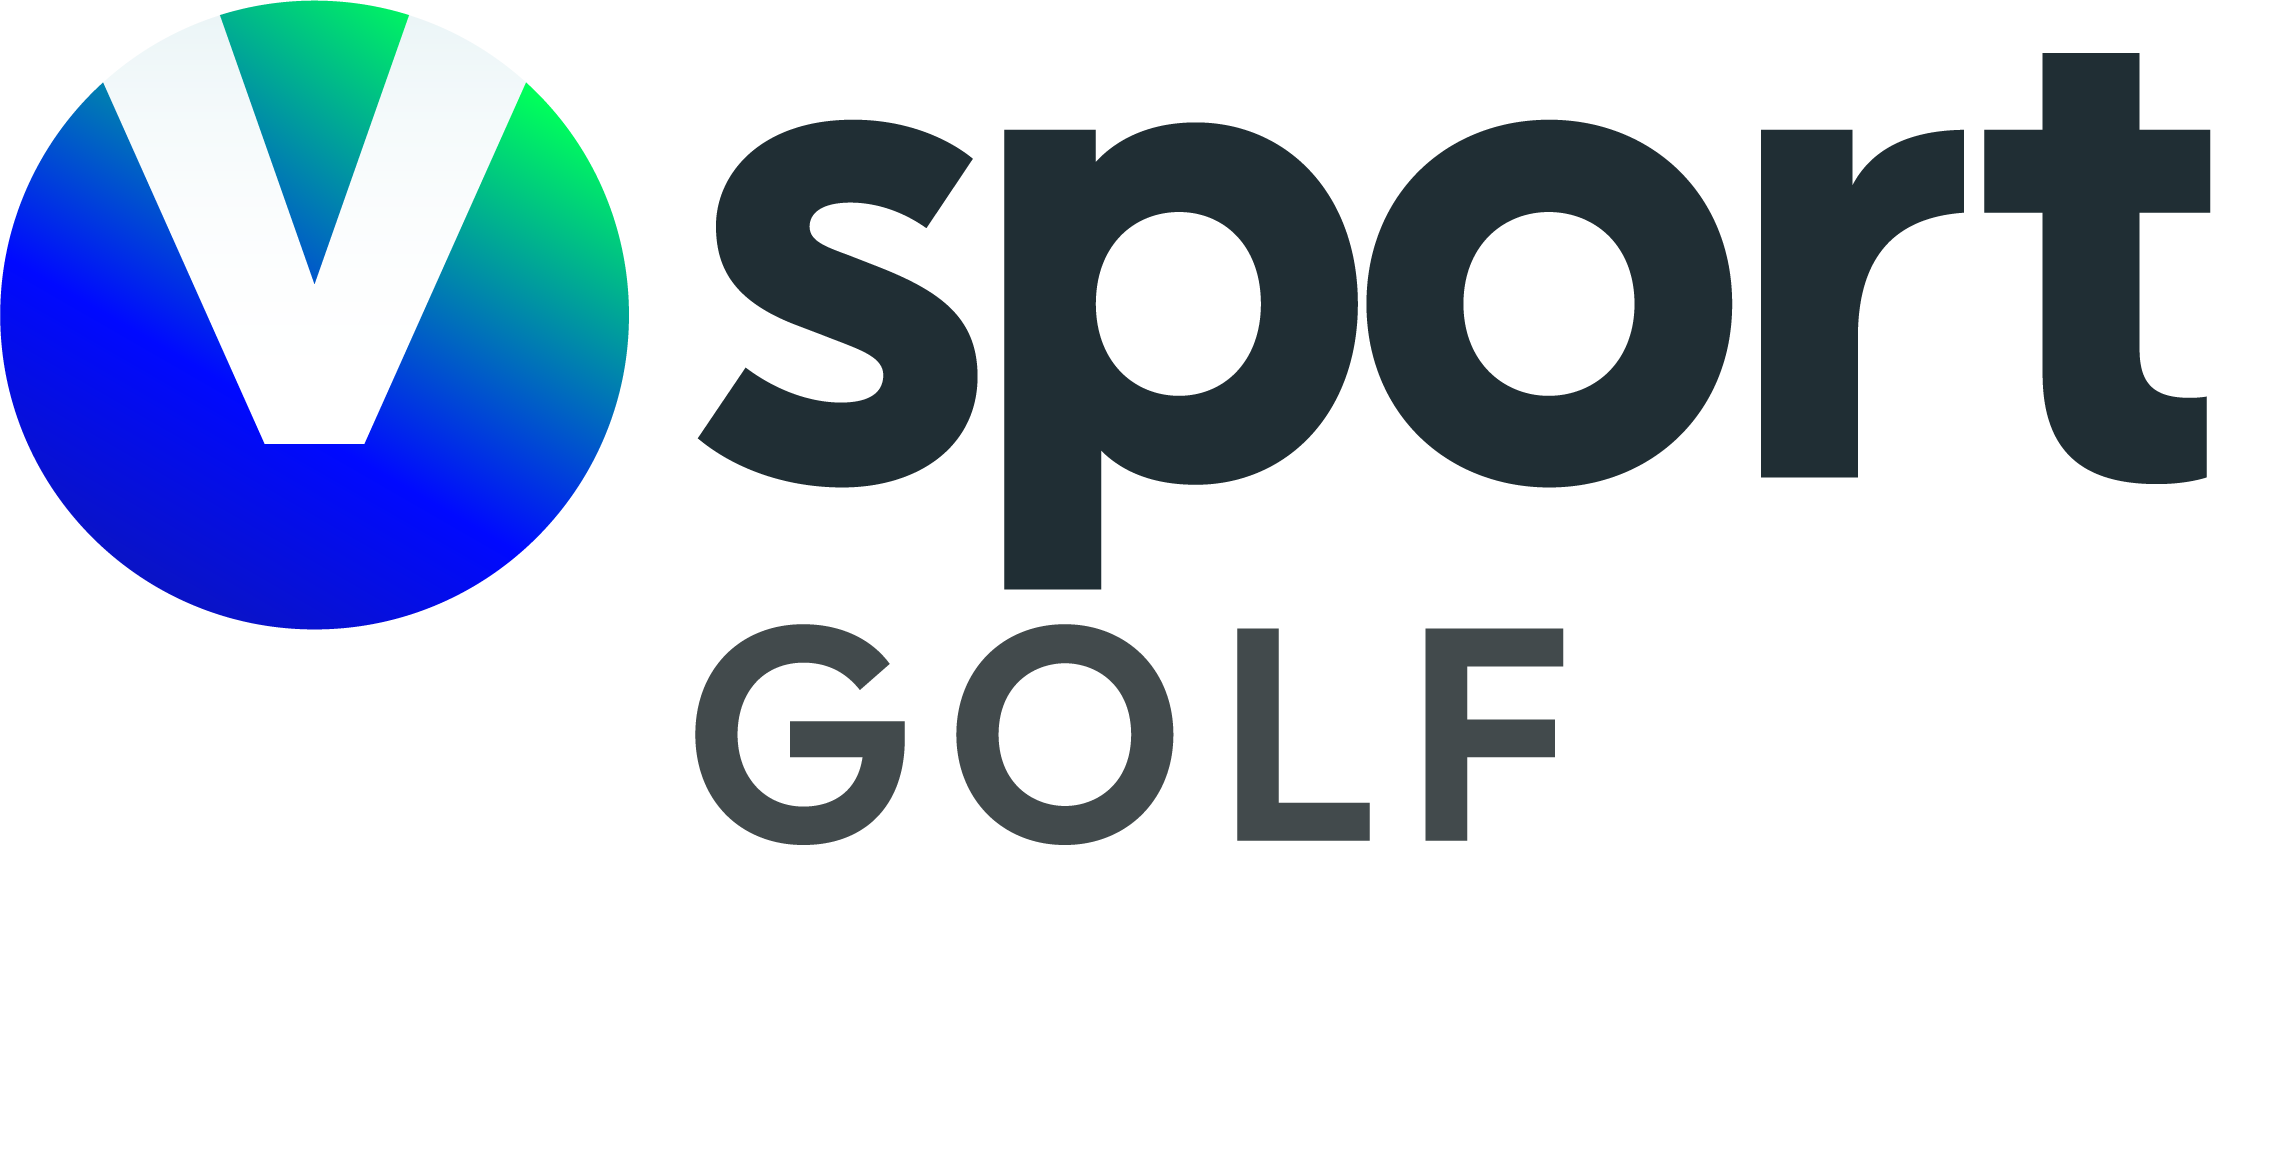 Sport3 tv. Viasat Golf. Viasat Golf логотип. Логотипы норвежских телеканалов. Viasat Sport urheilu лого.